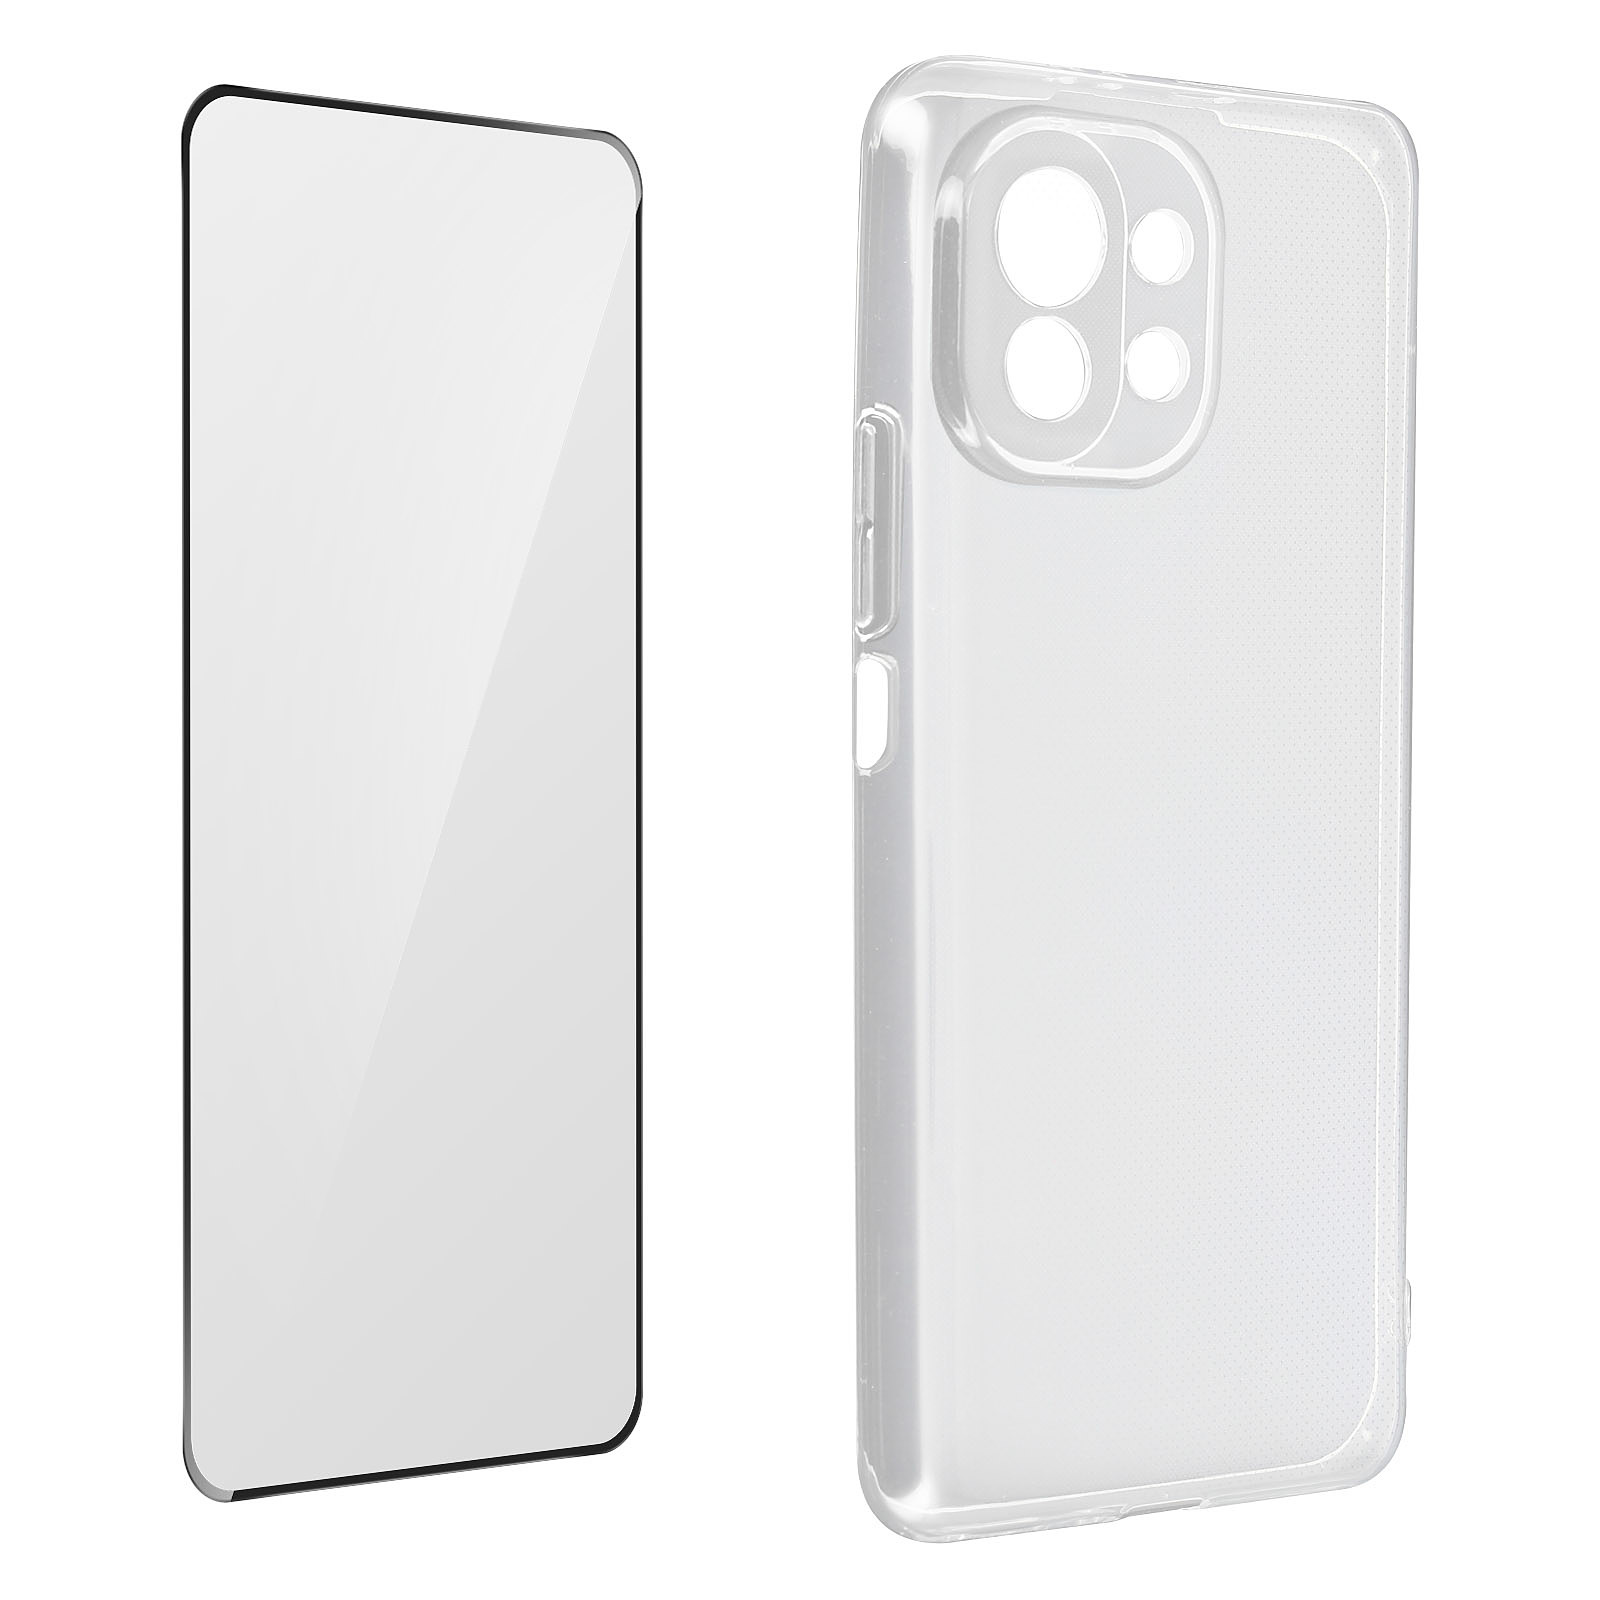 Avizar Coque pour Xiaomi Mi 11 Lite et Mi 11 Lite 5G Souple et Film Verre Trempe Durete 9H Transparent Noir - Coque telephone Avizar